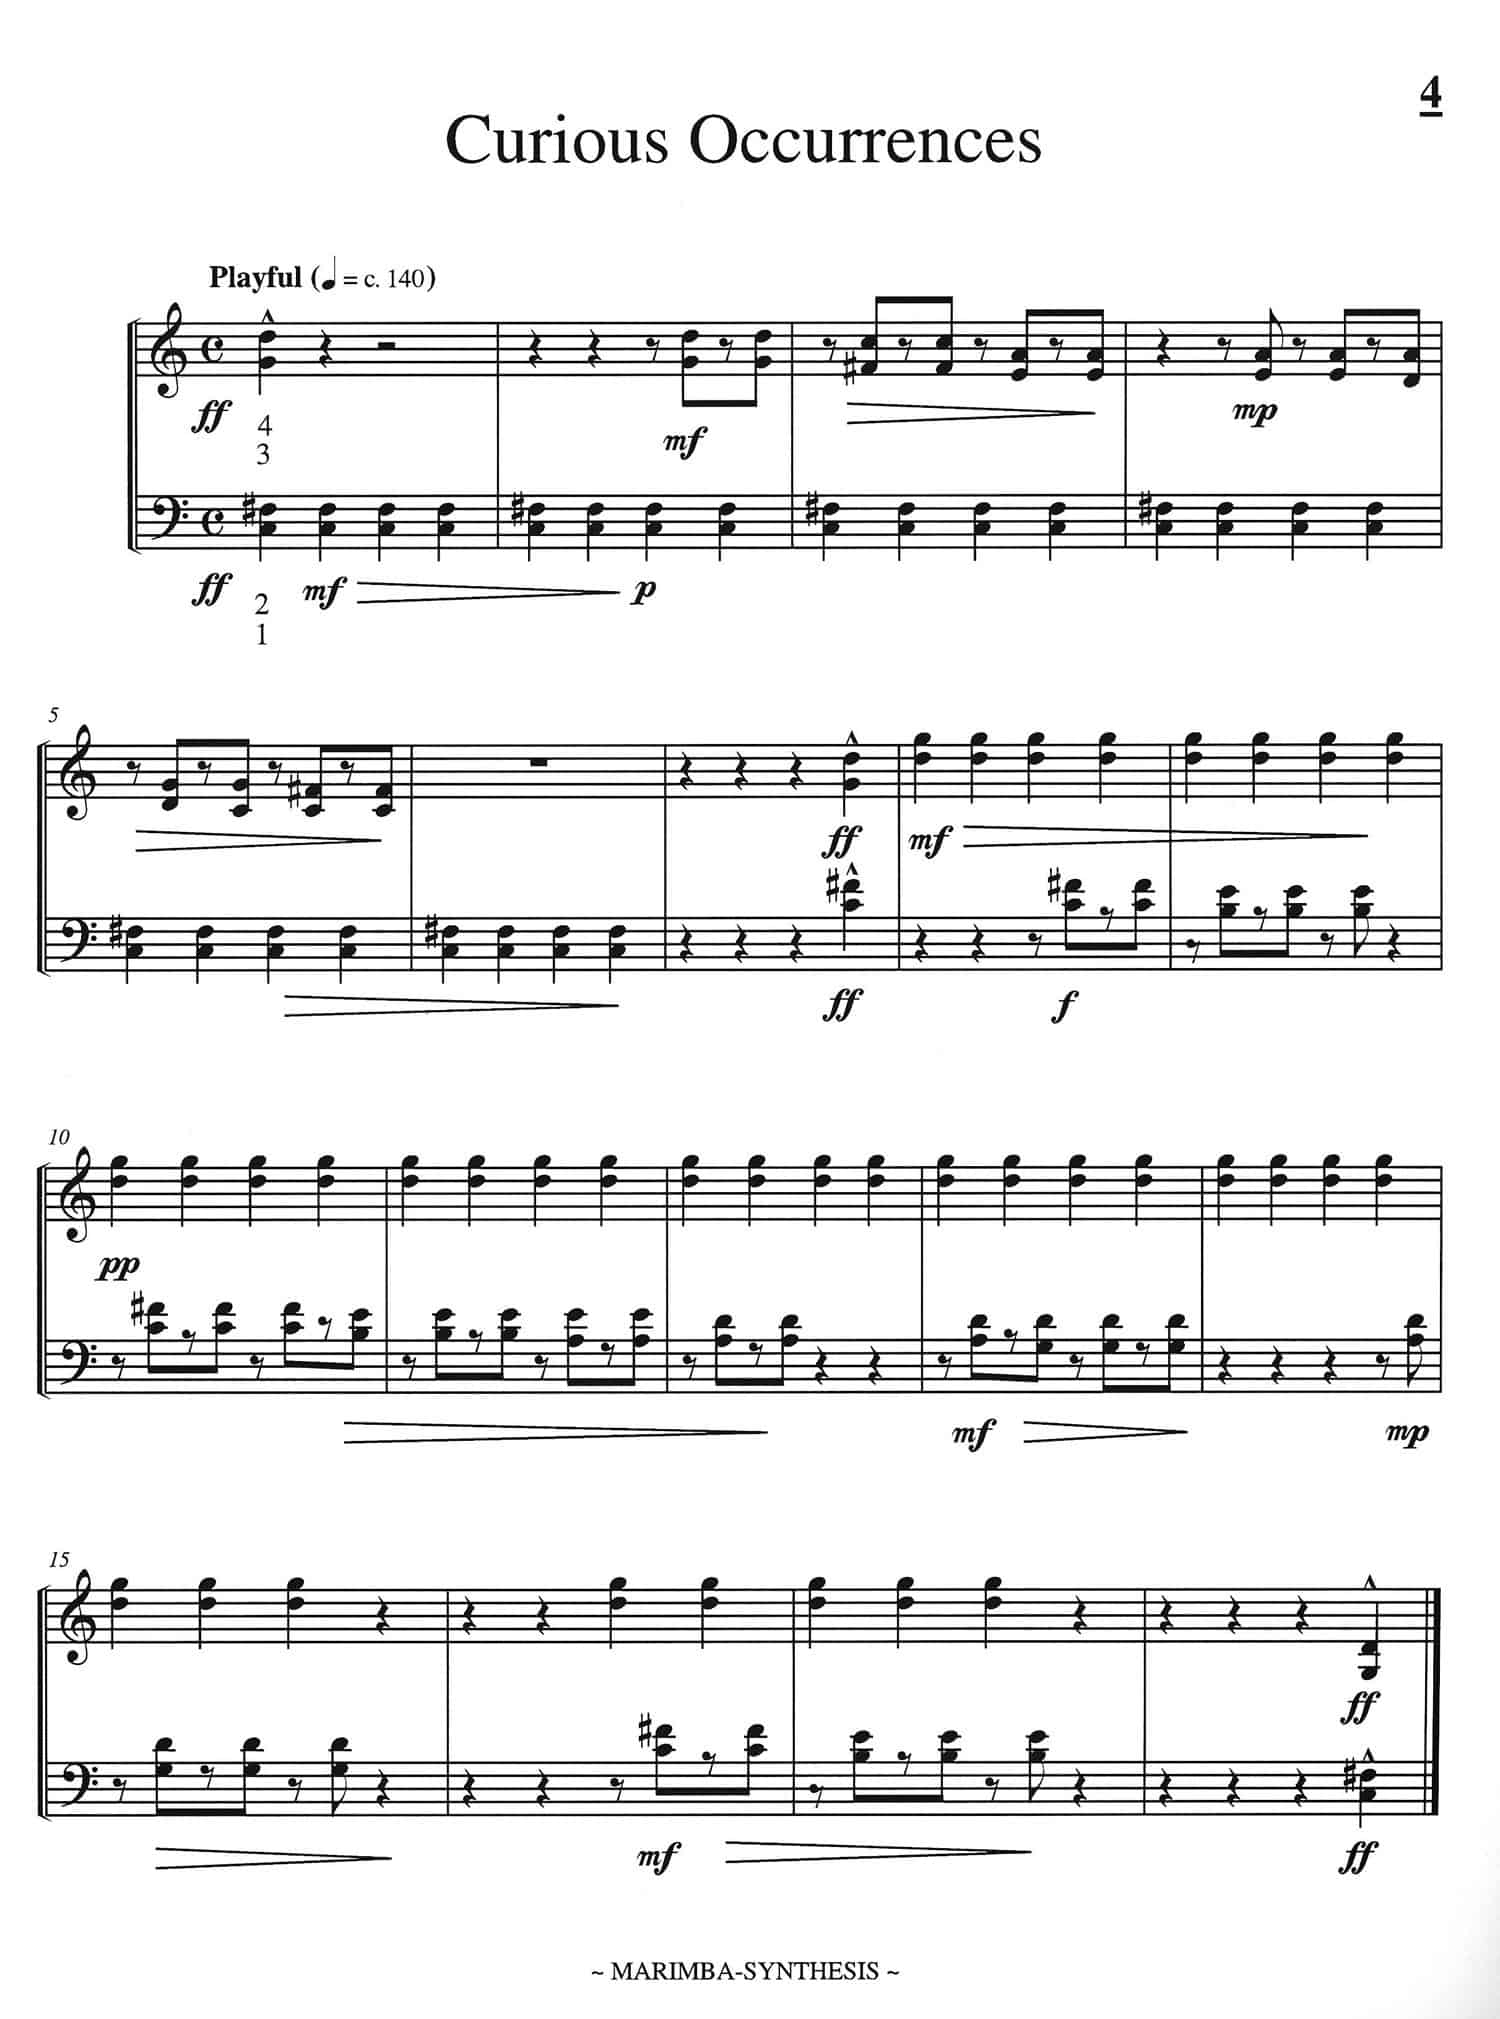 Marimba - Synthesis